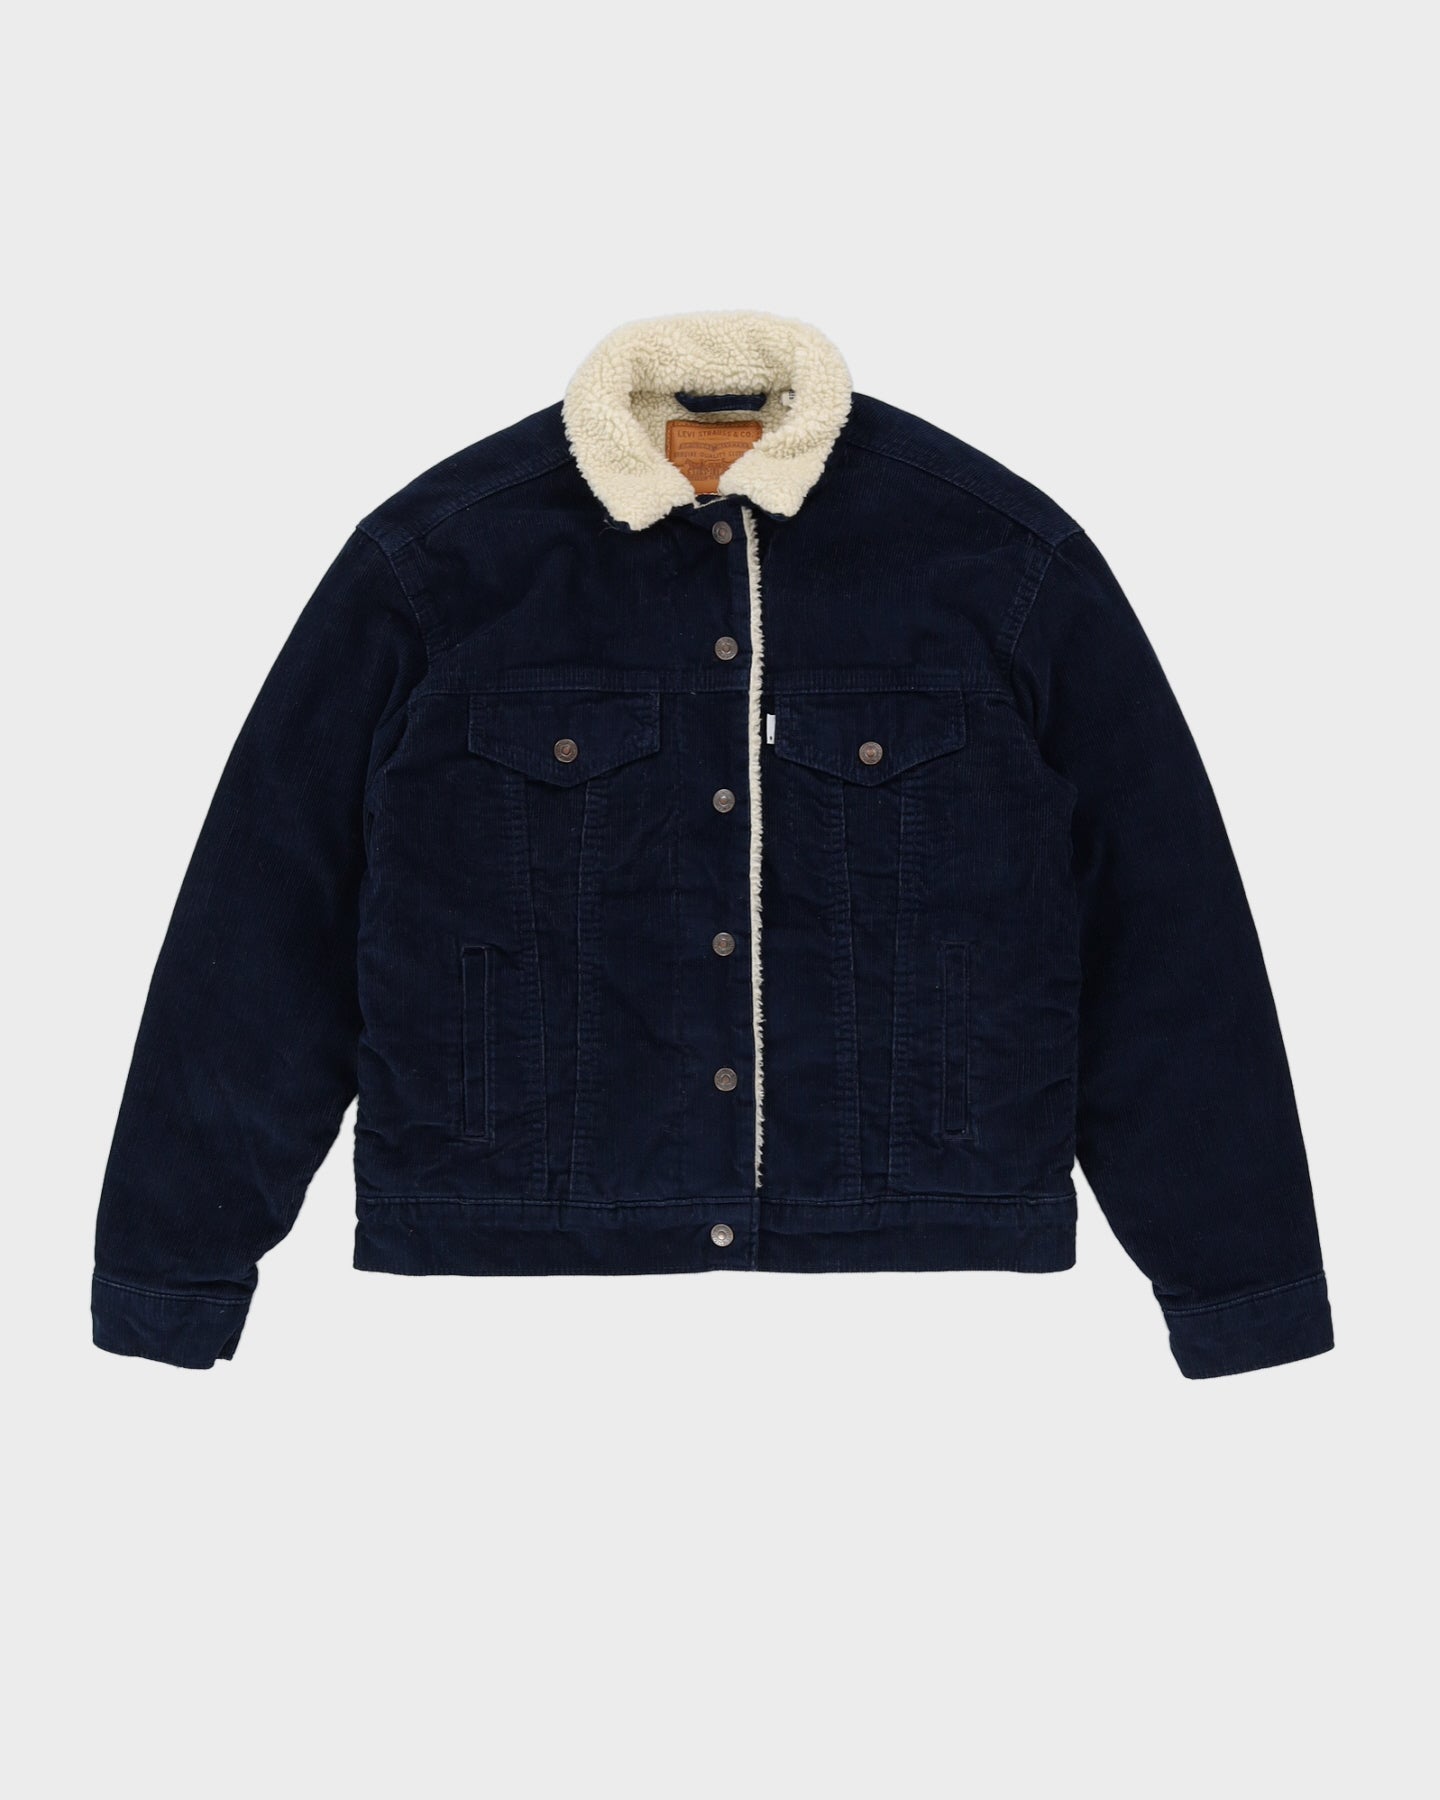 Levi's Blue Cord Fleece Lined Jacket - M